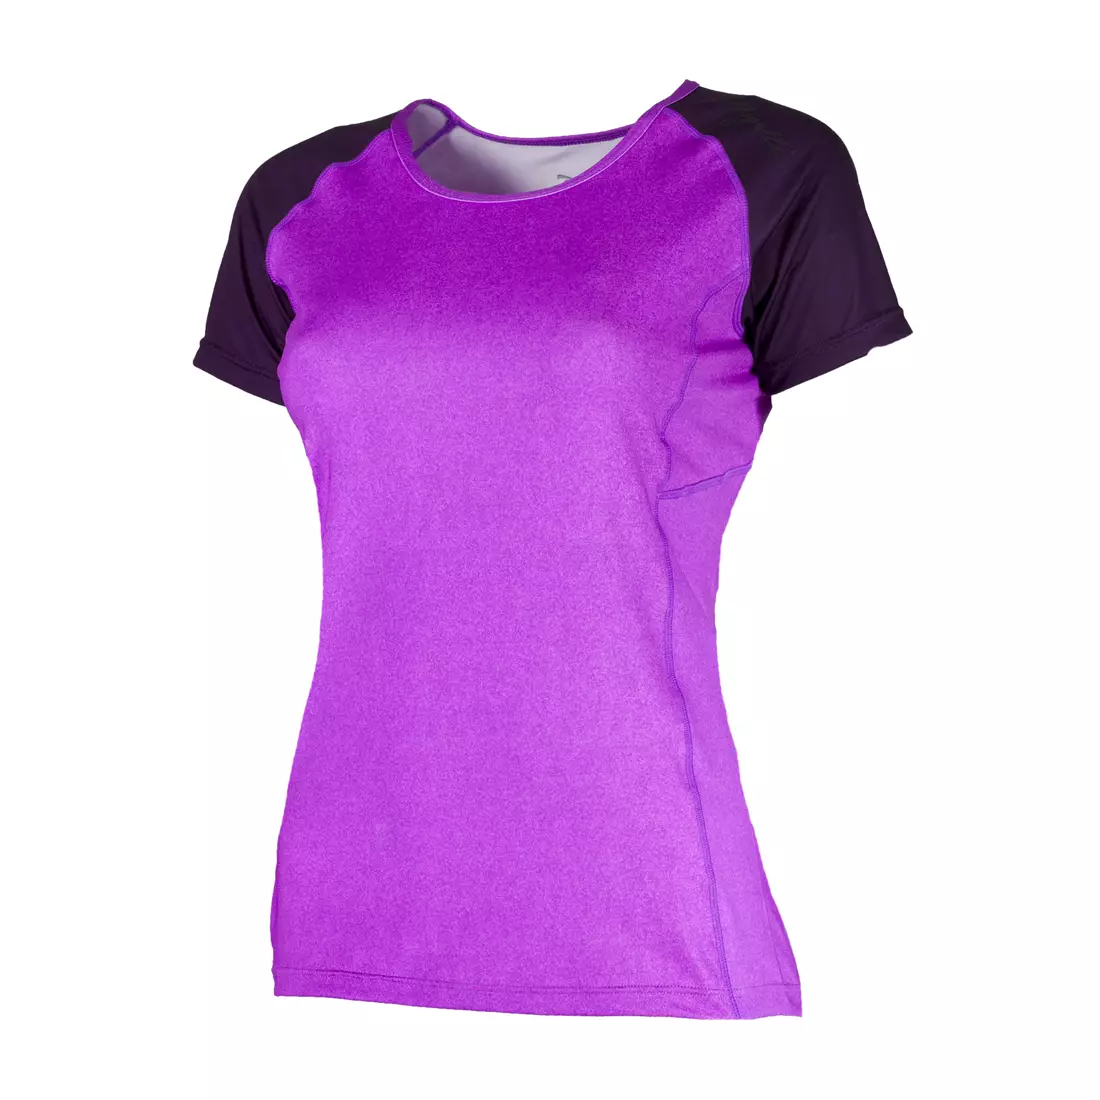 ROGELLI RUN SAMUELA 840.262 - women's running T-shirt, color: purple